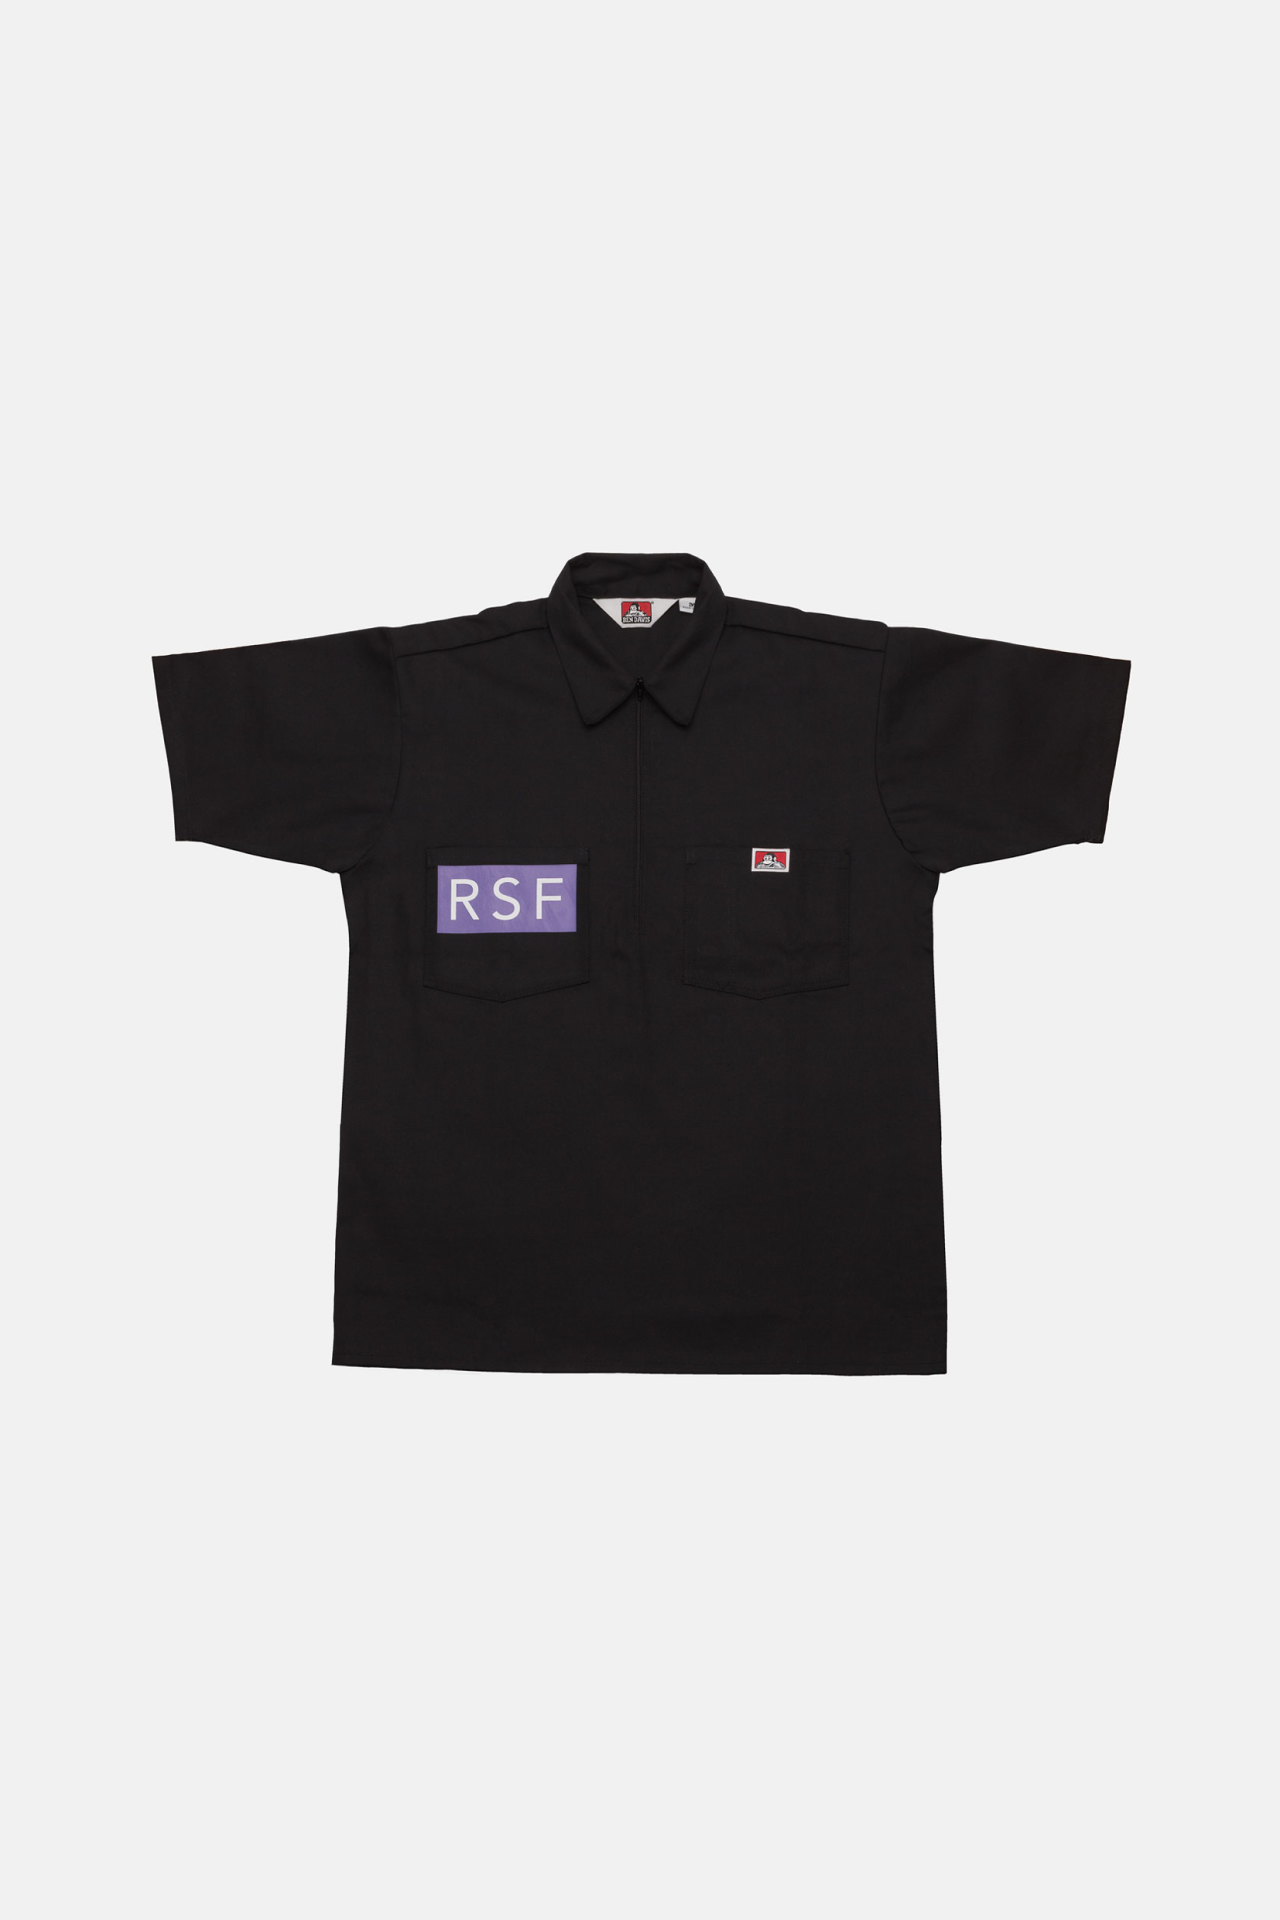 RSF Shirt Black